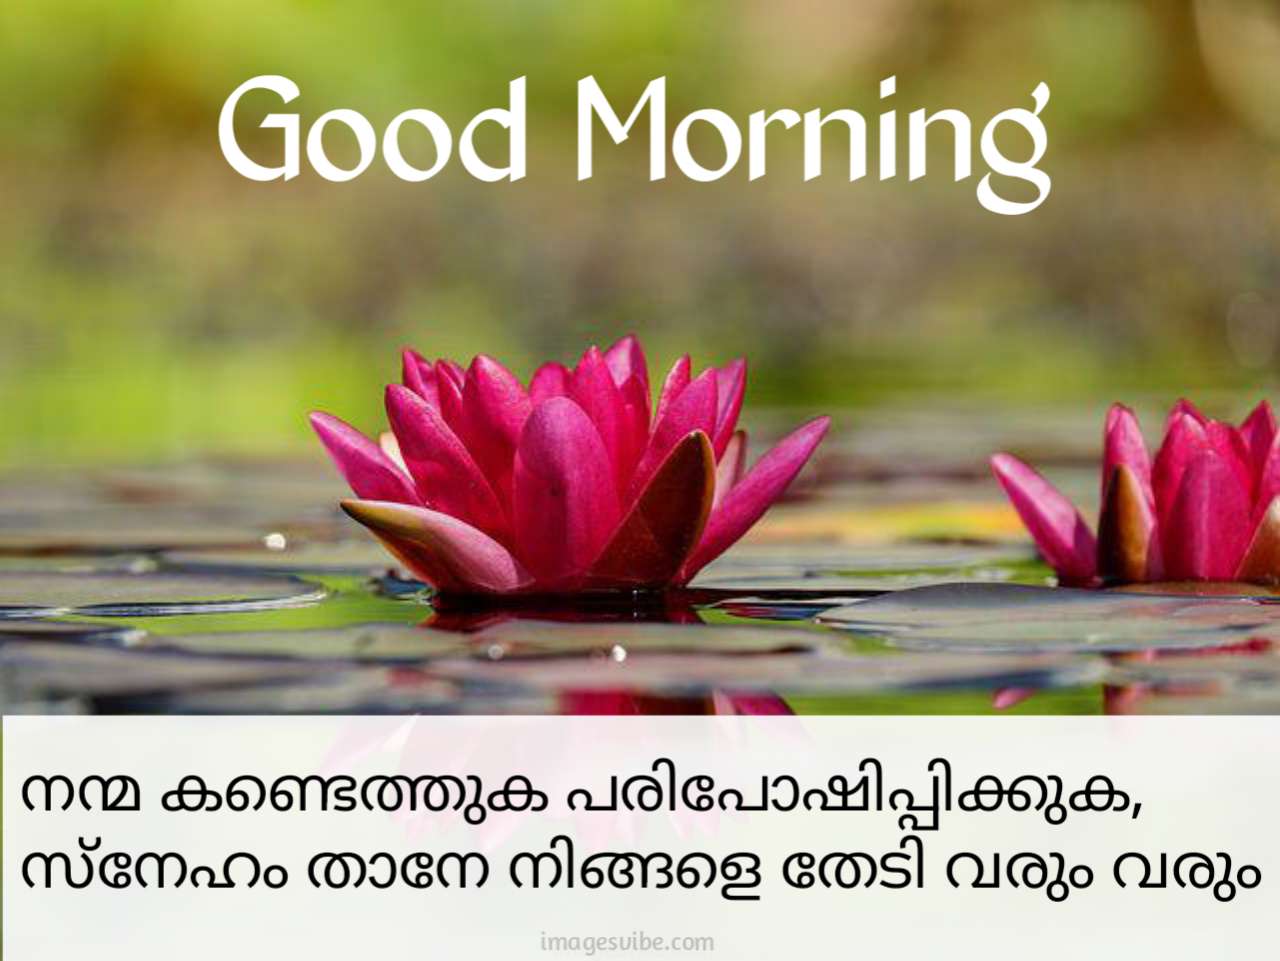 Beautiful Good Morning Malayalam Images & Quotes - Images Vibe